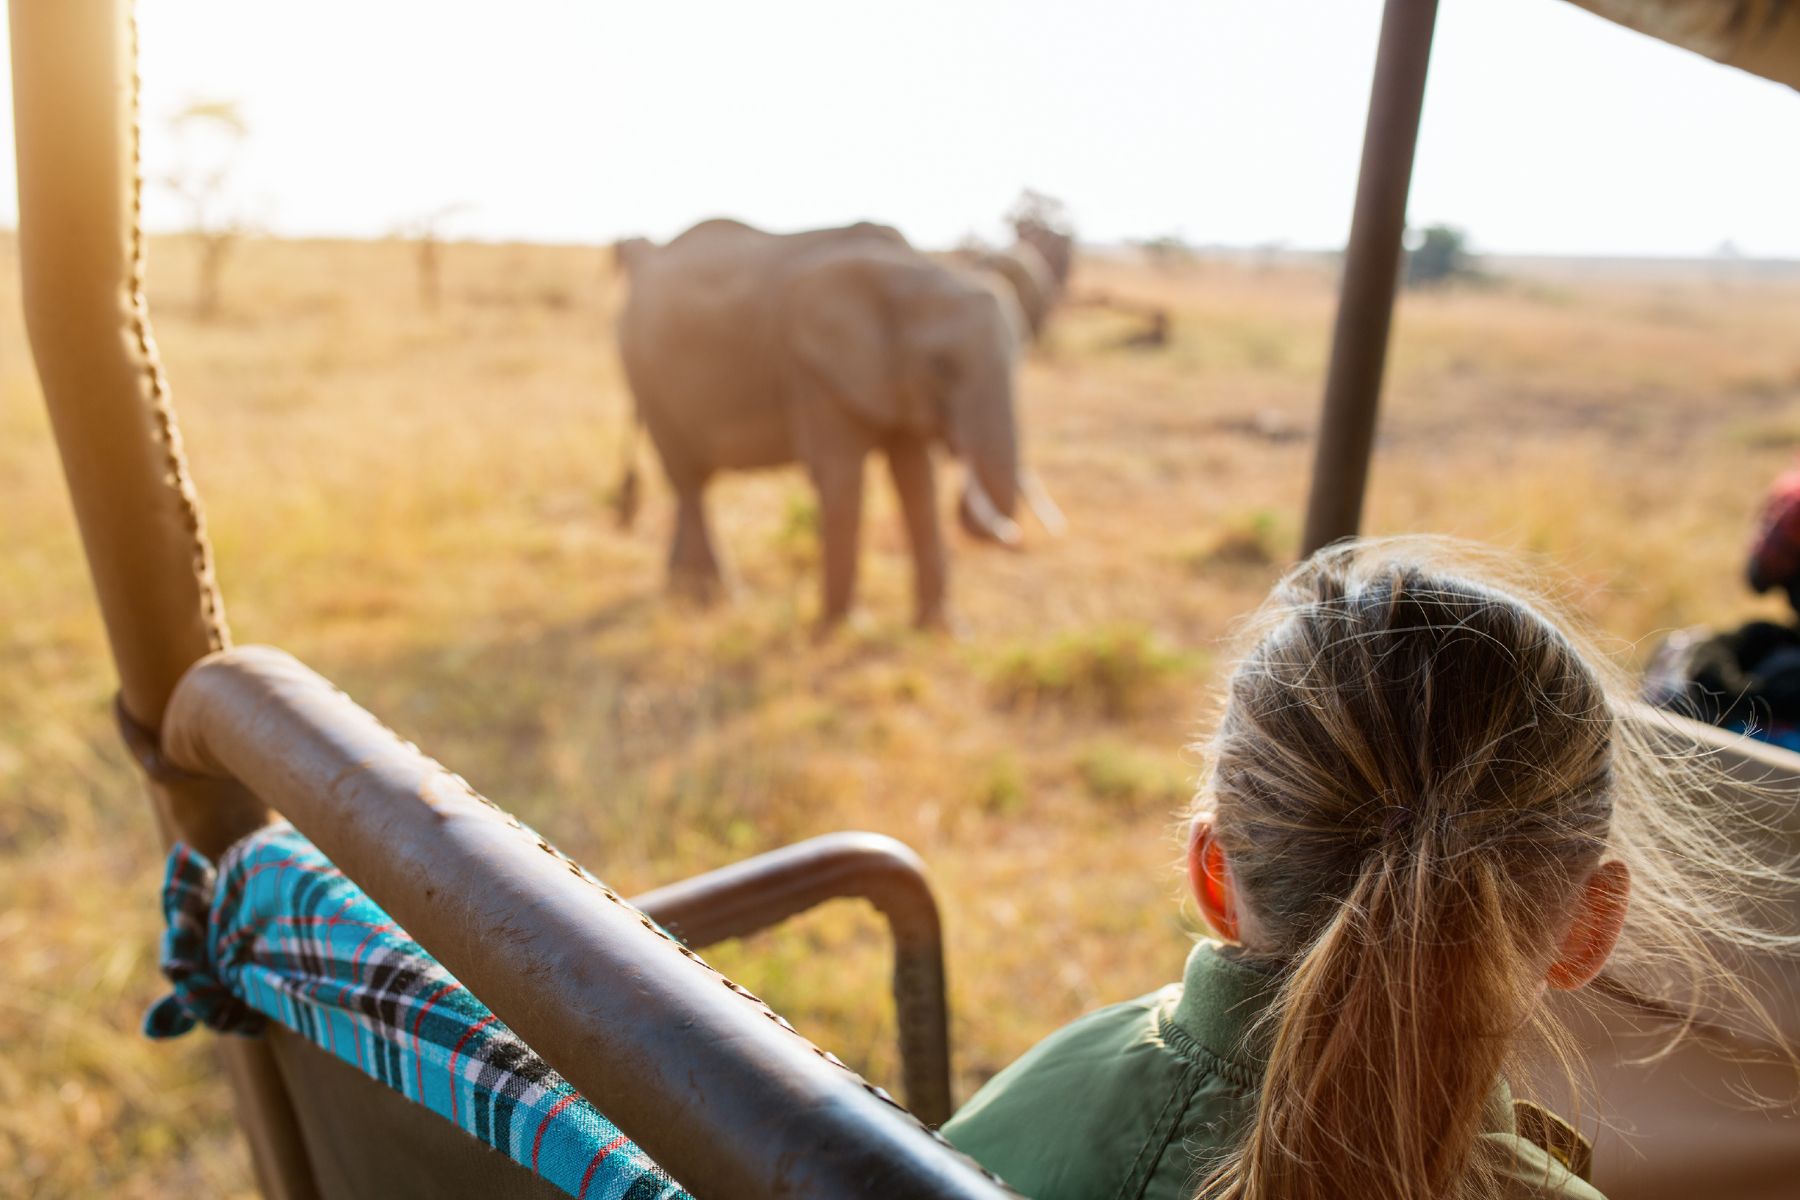 Young girl in a safari vehicle looking at elephants, Kenya